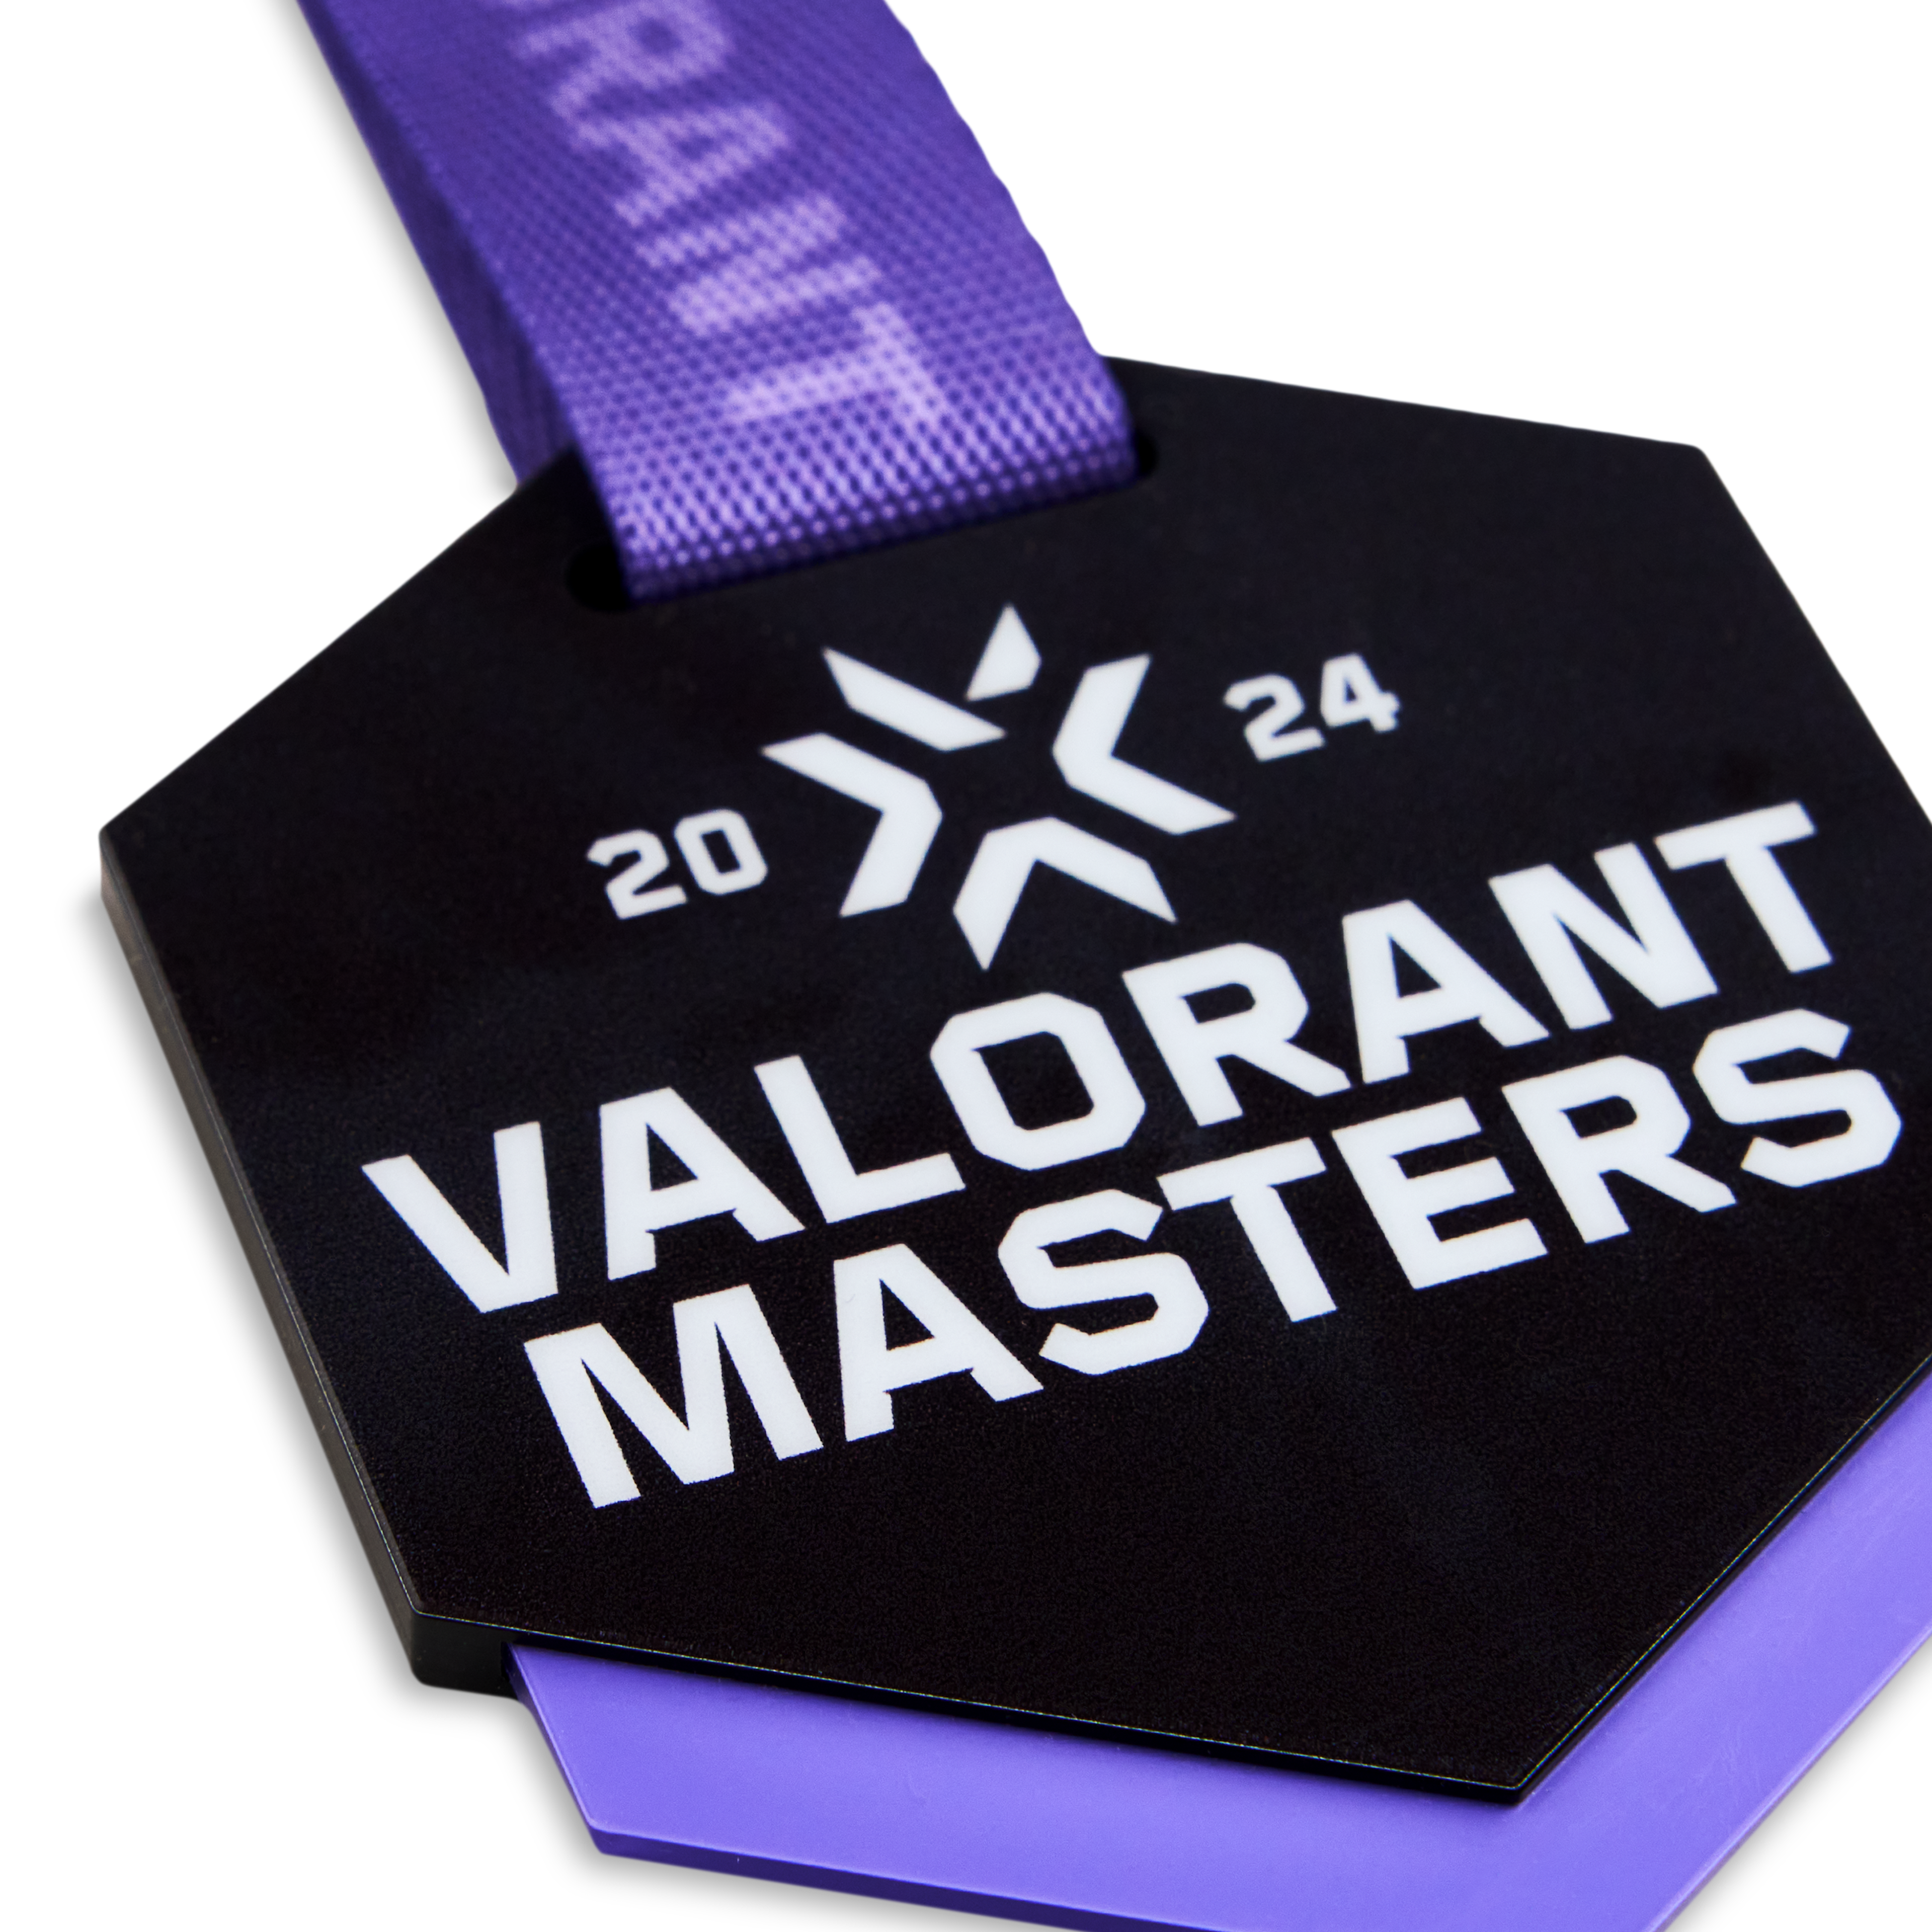 VALORANT Masters Madrid 24 // Portachiavi Accessorio arma